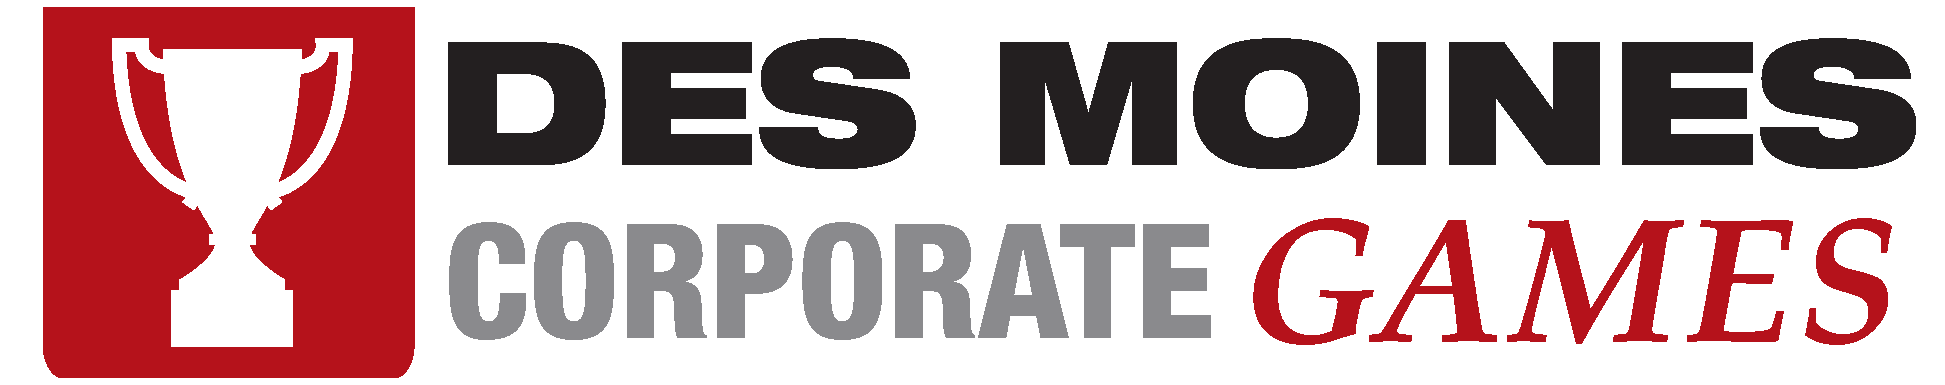 Dmc logo image